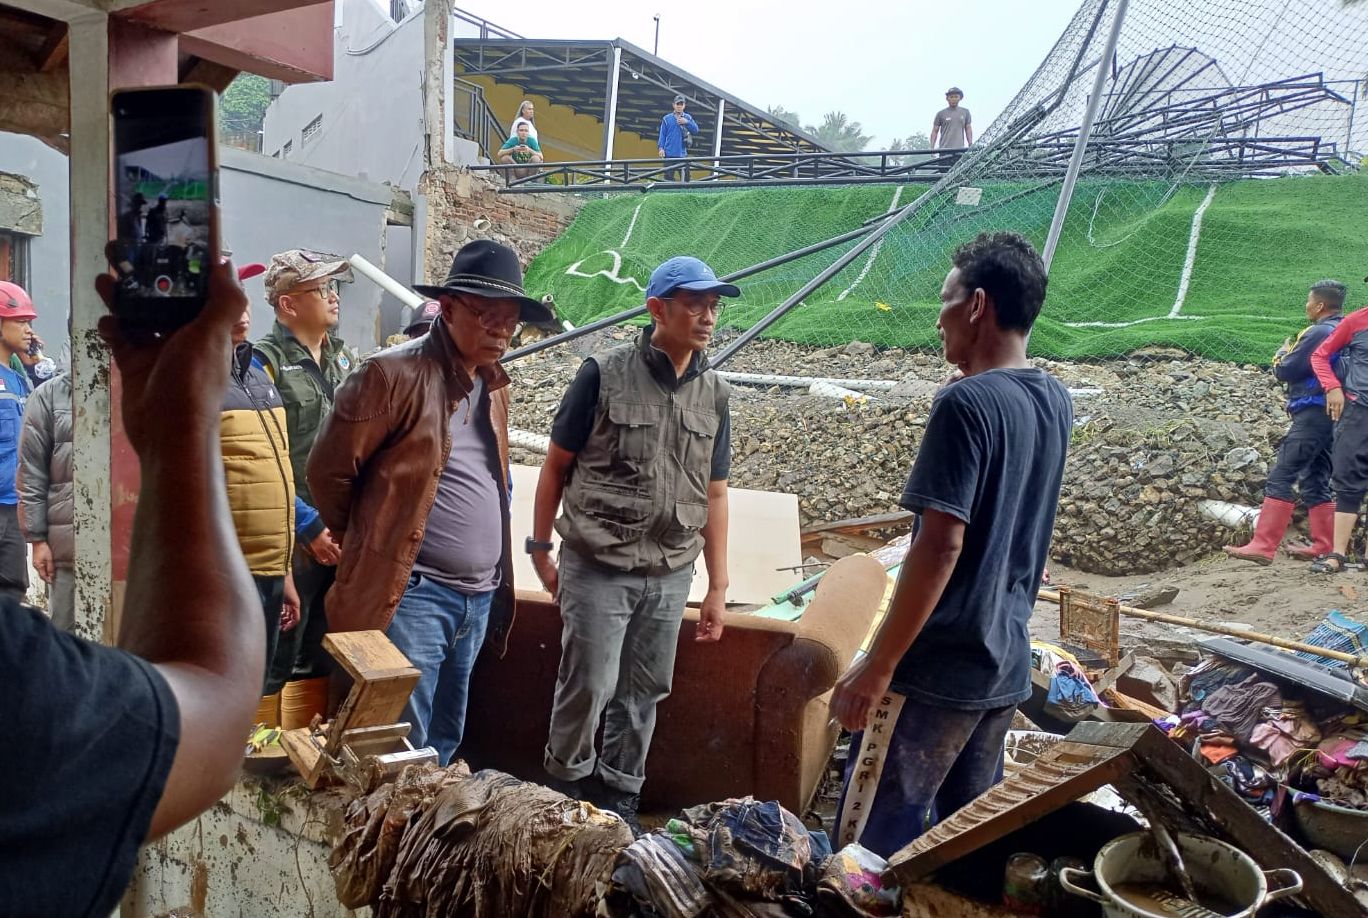 Sekda Kota Cimahi Dikdik S. Nugrahawan beserta jajaran memantau lokasi bencana banjir di Kelurahan Cipageran Kecamatan Cimahi Utara Kota Cimahi. 